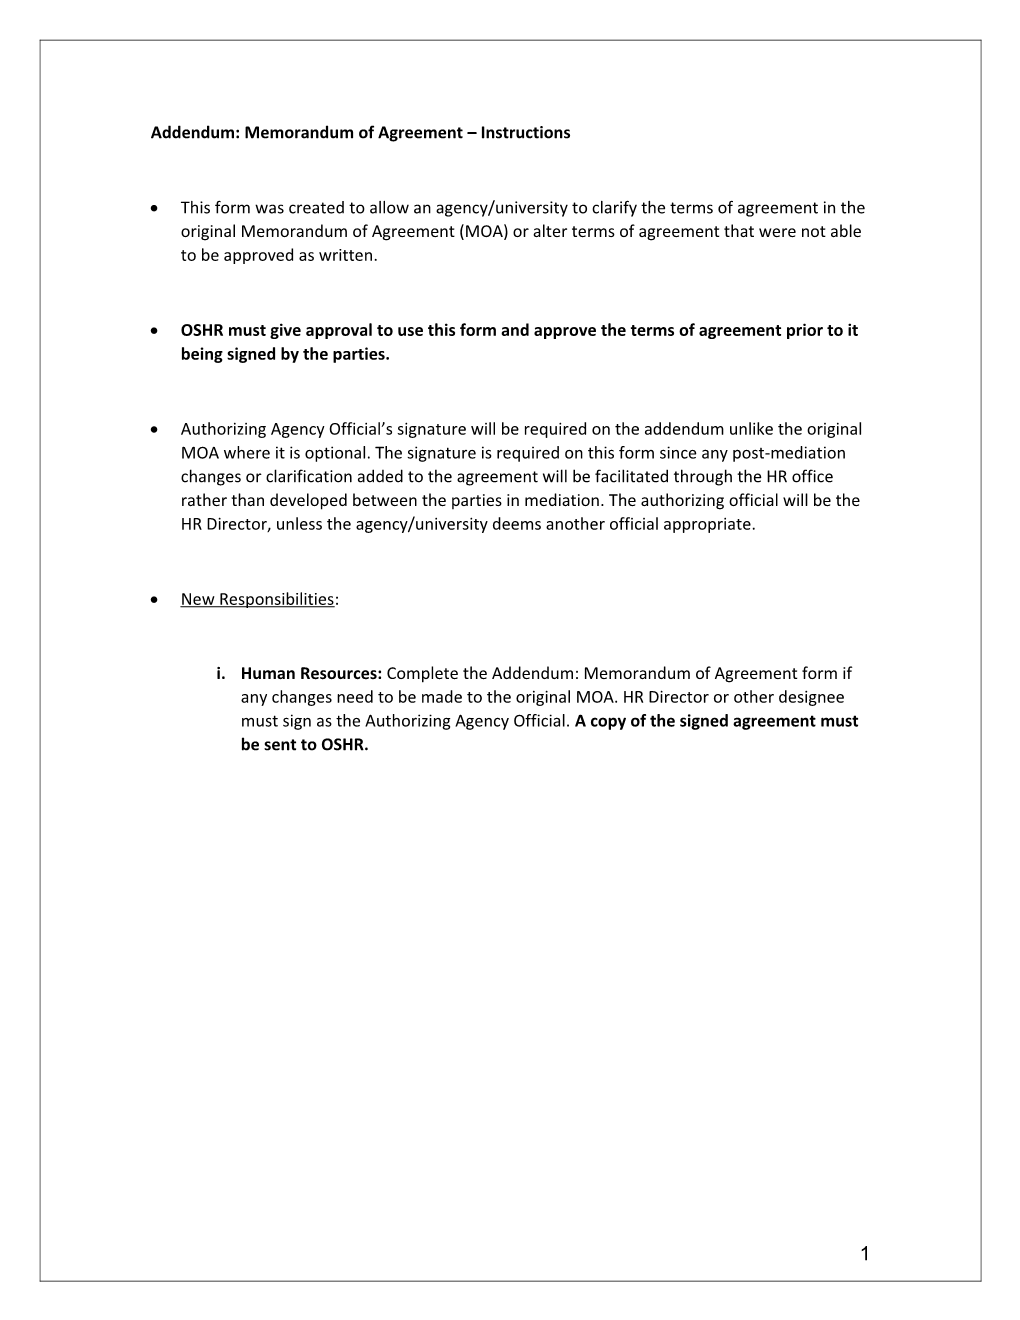 Addendum: Memorandum of Agreement Instructions